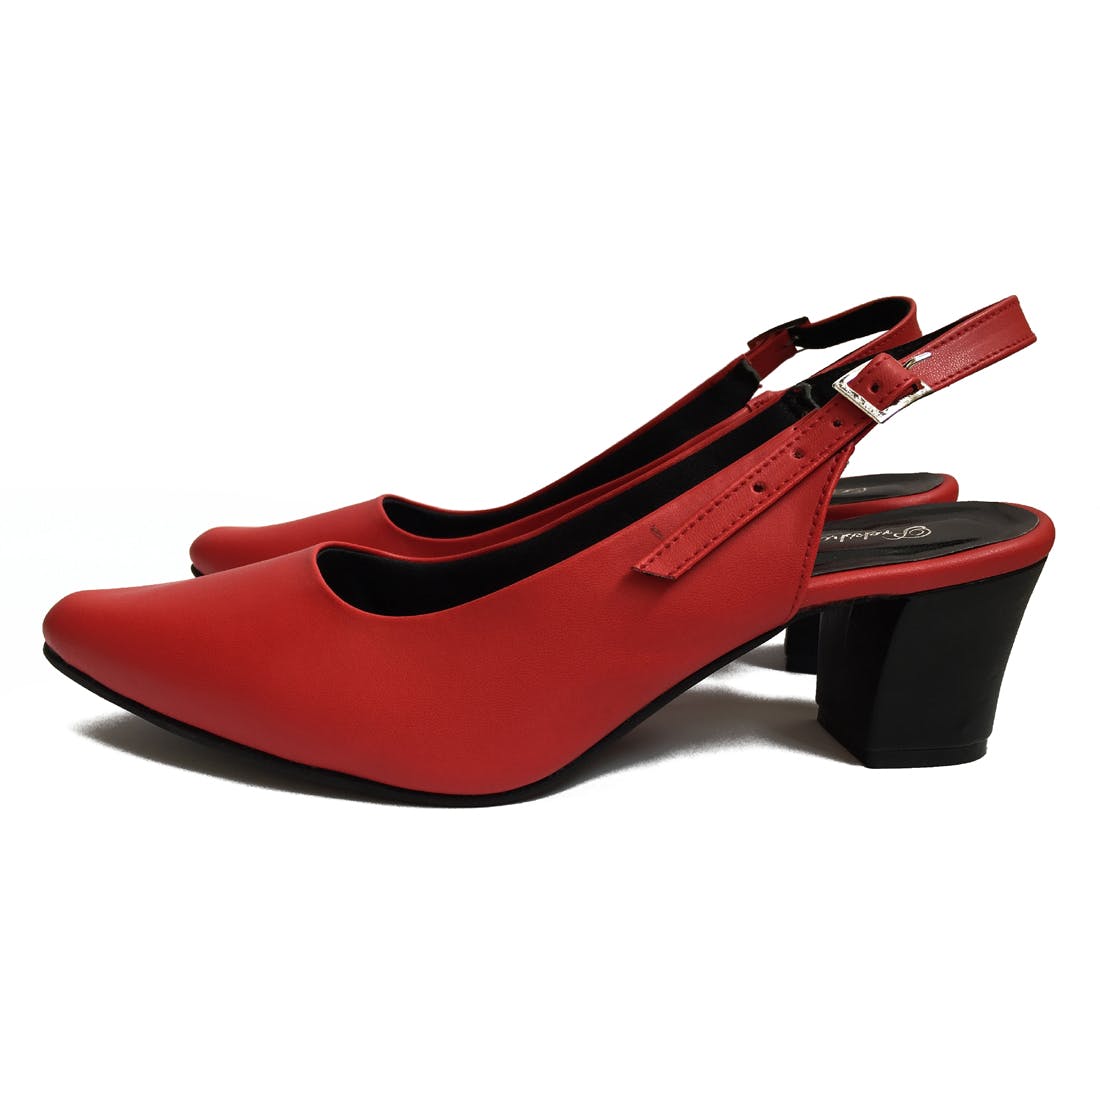 Uterque Mid Block Heel Pumps in Red Patent Leather - Queen Letizia Shoes -  Queen Letizia Style